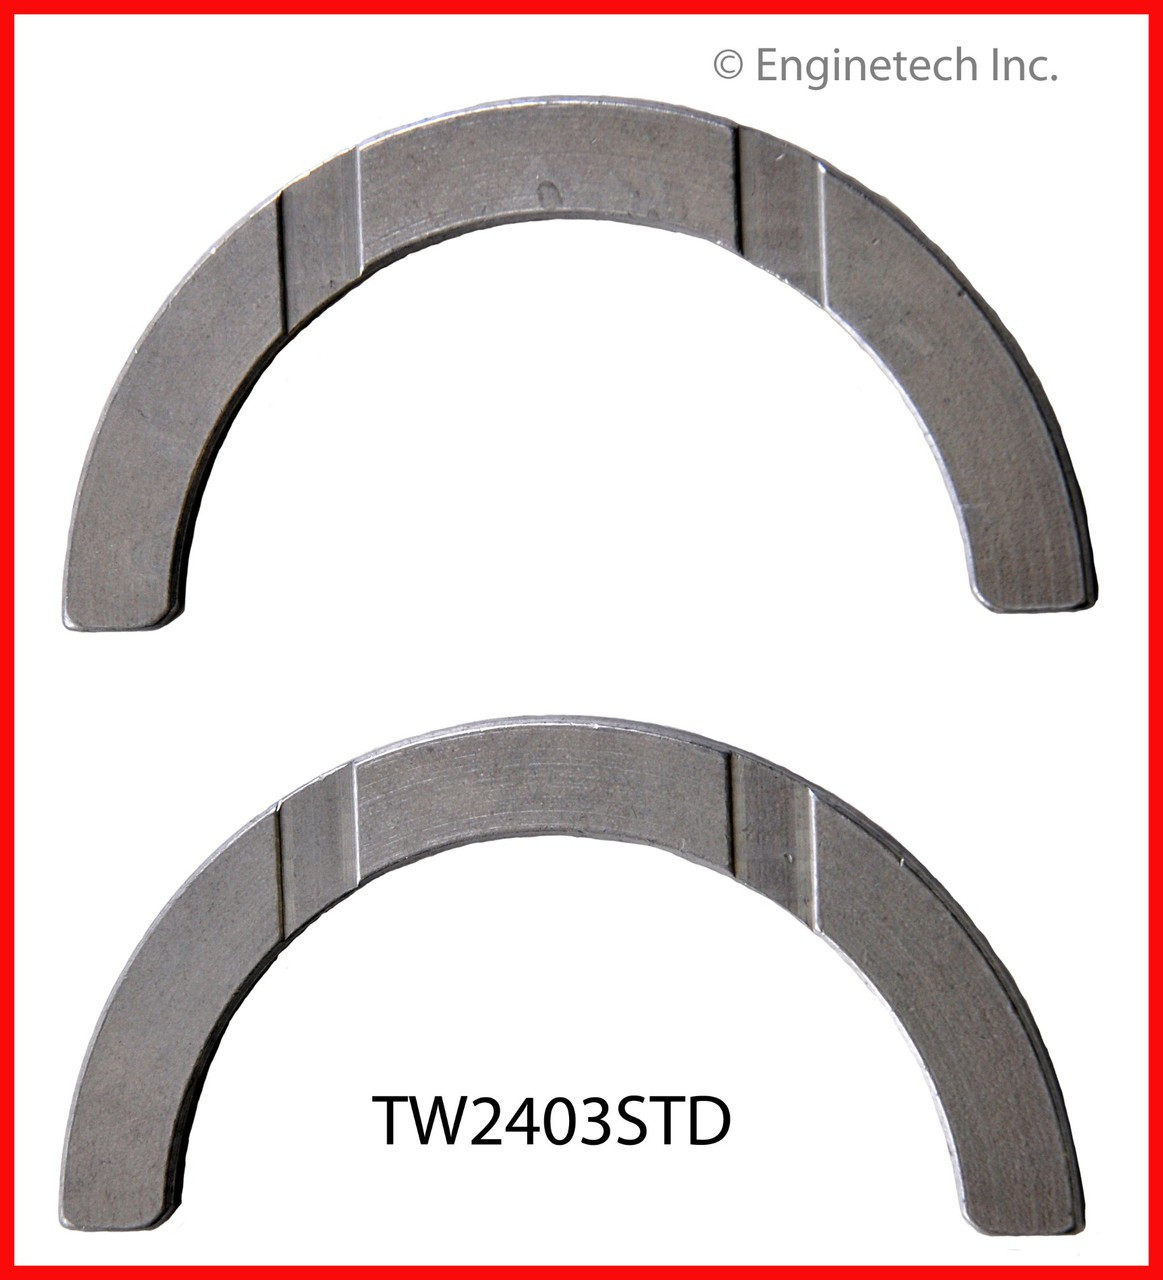 Crankshaft Thrust Washer - 2001 Suzuki Swift 1.3L (TW2403STD.F52)